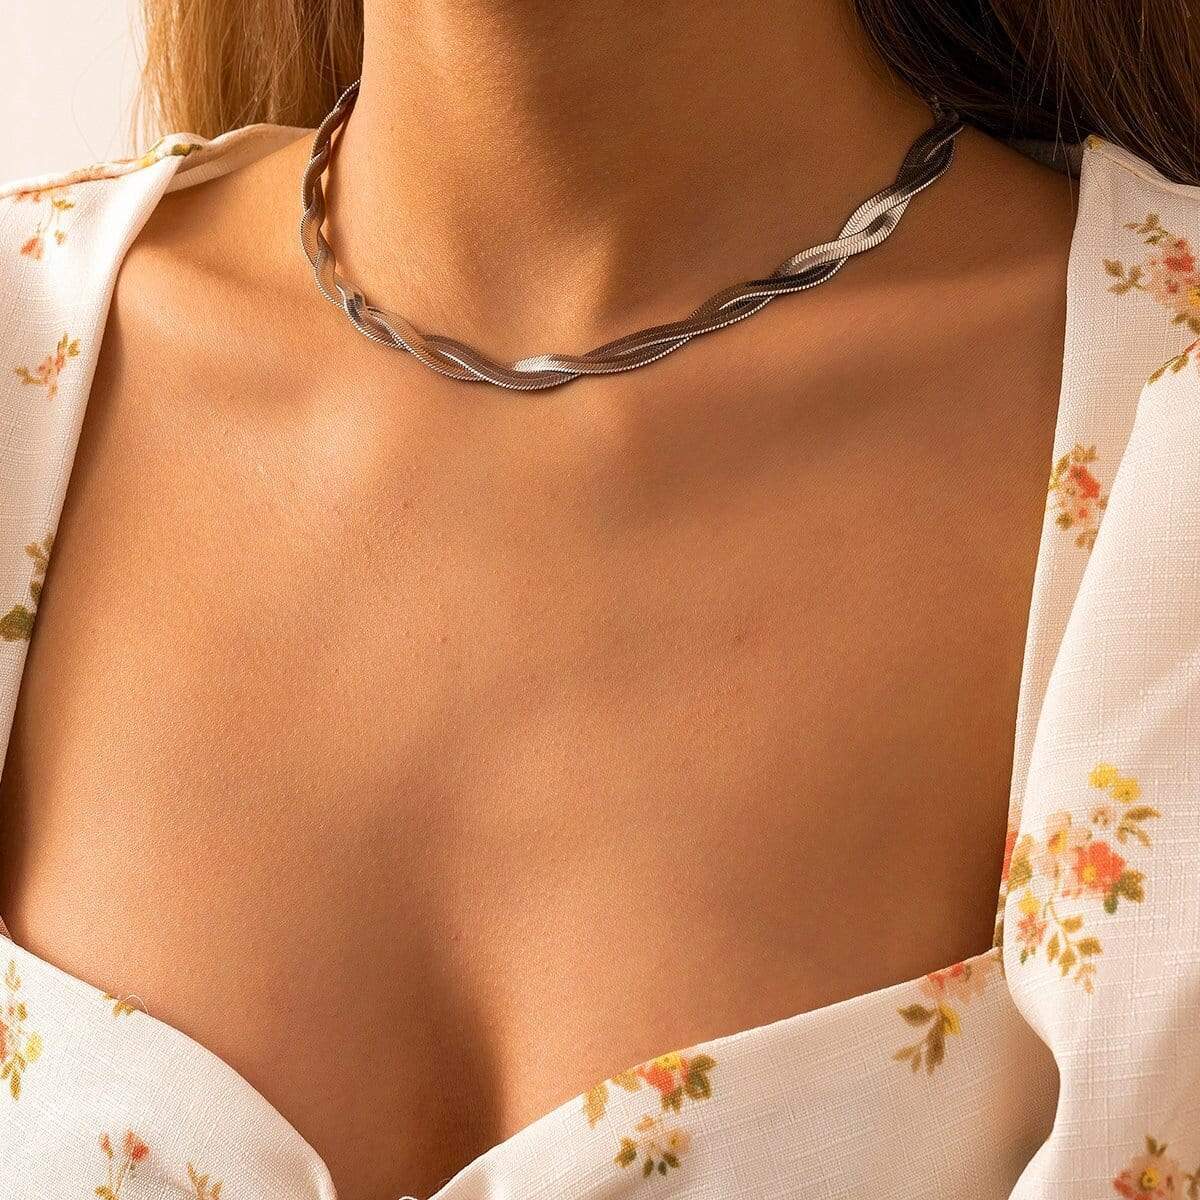 Herringbone Chain Necklace - Ina | Ana Luisa Jewelry